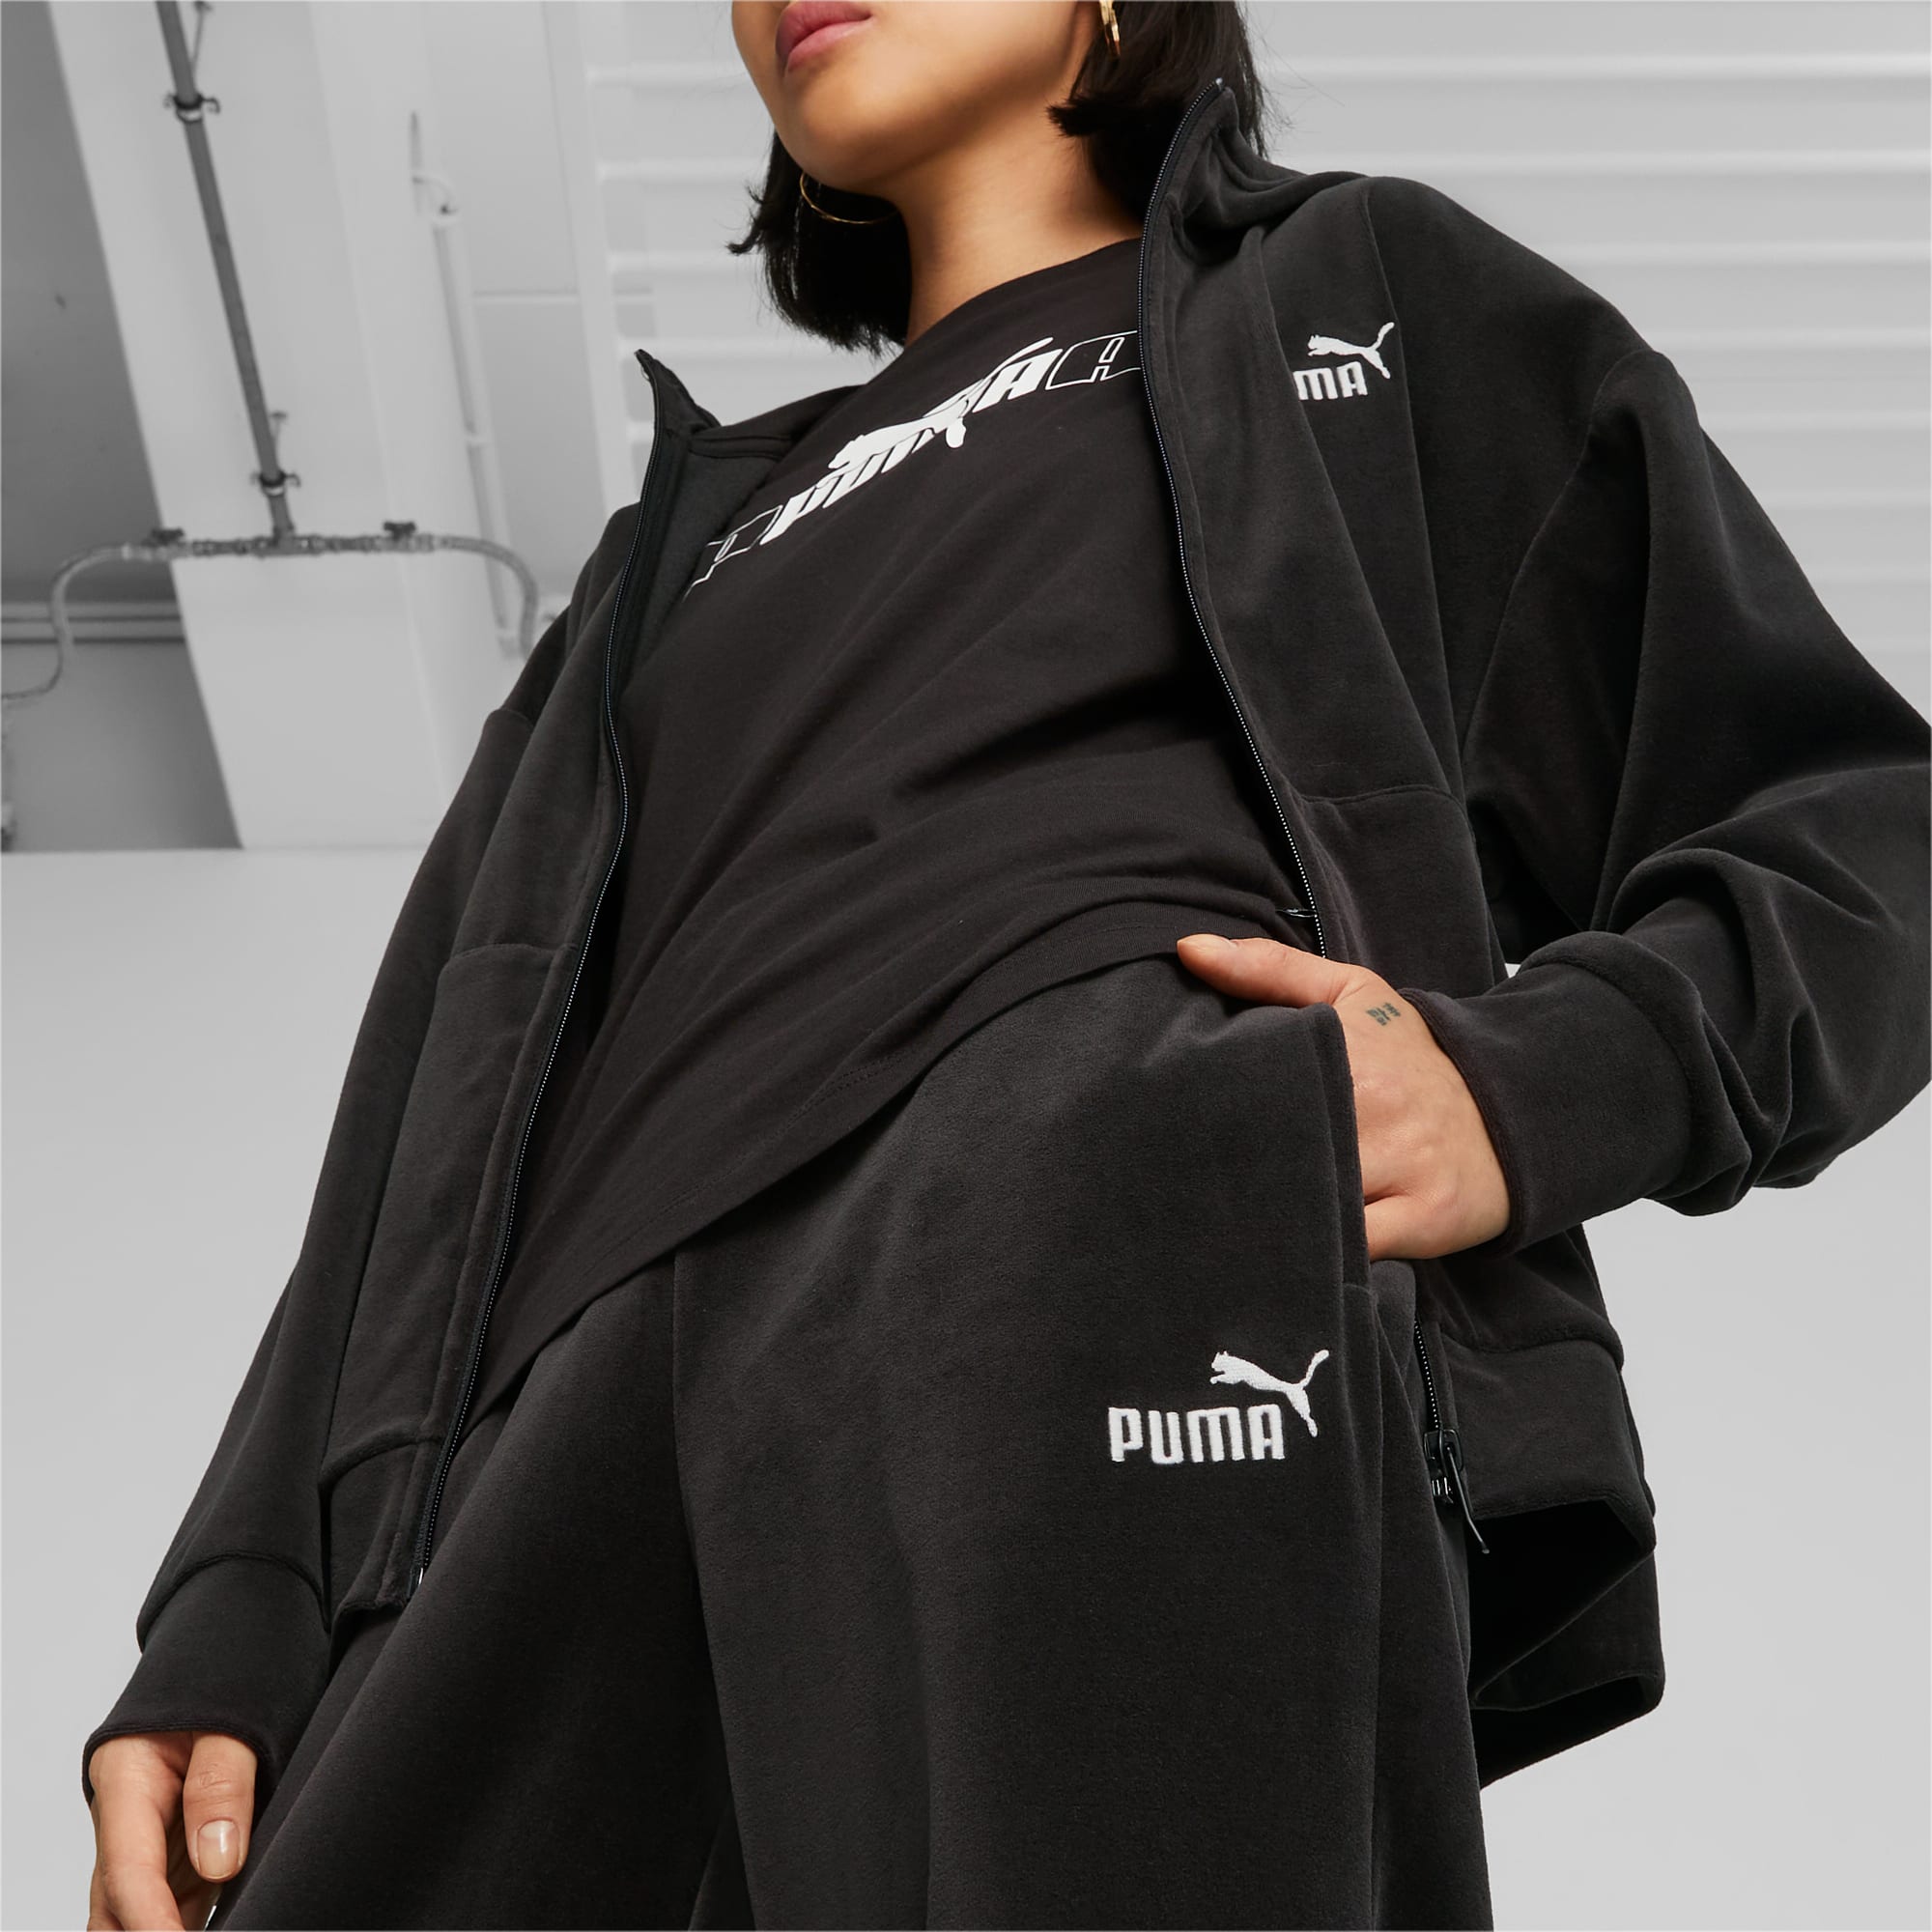 PUMA WOMEN Sport Lifestyle Cotton-Blend Comfortable Lounge Pants XL NWOT